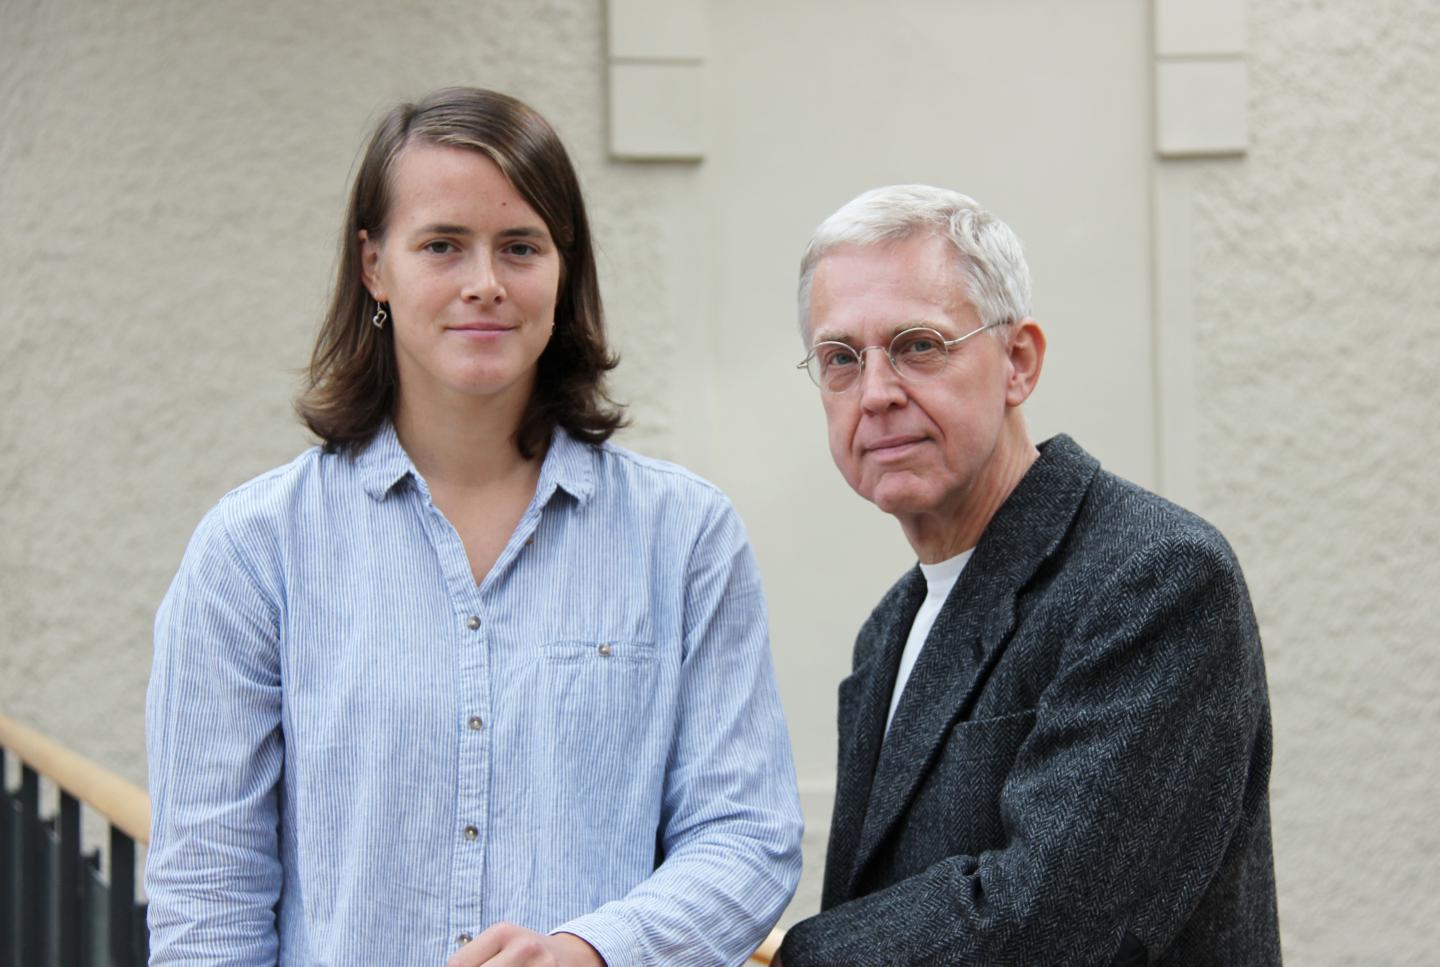 Anna Furberg (l) and Sverker Molander (r), Chalmers University of Technology